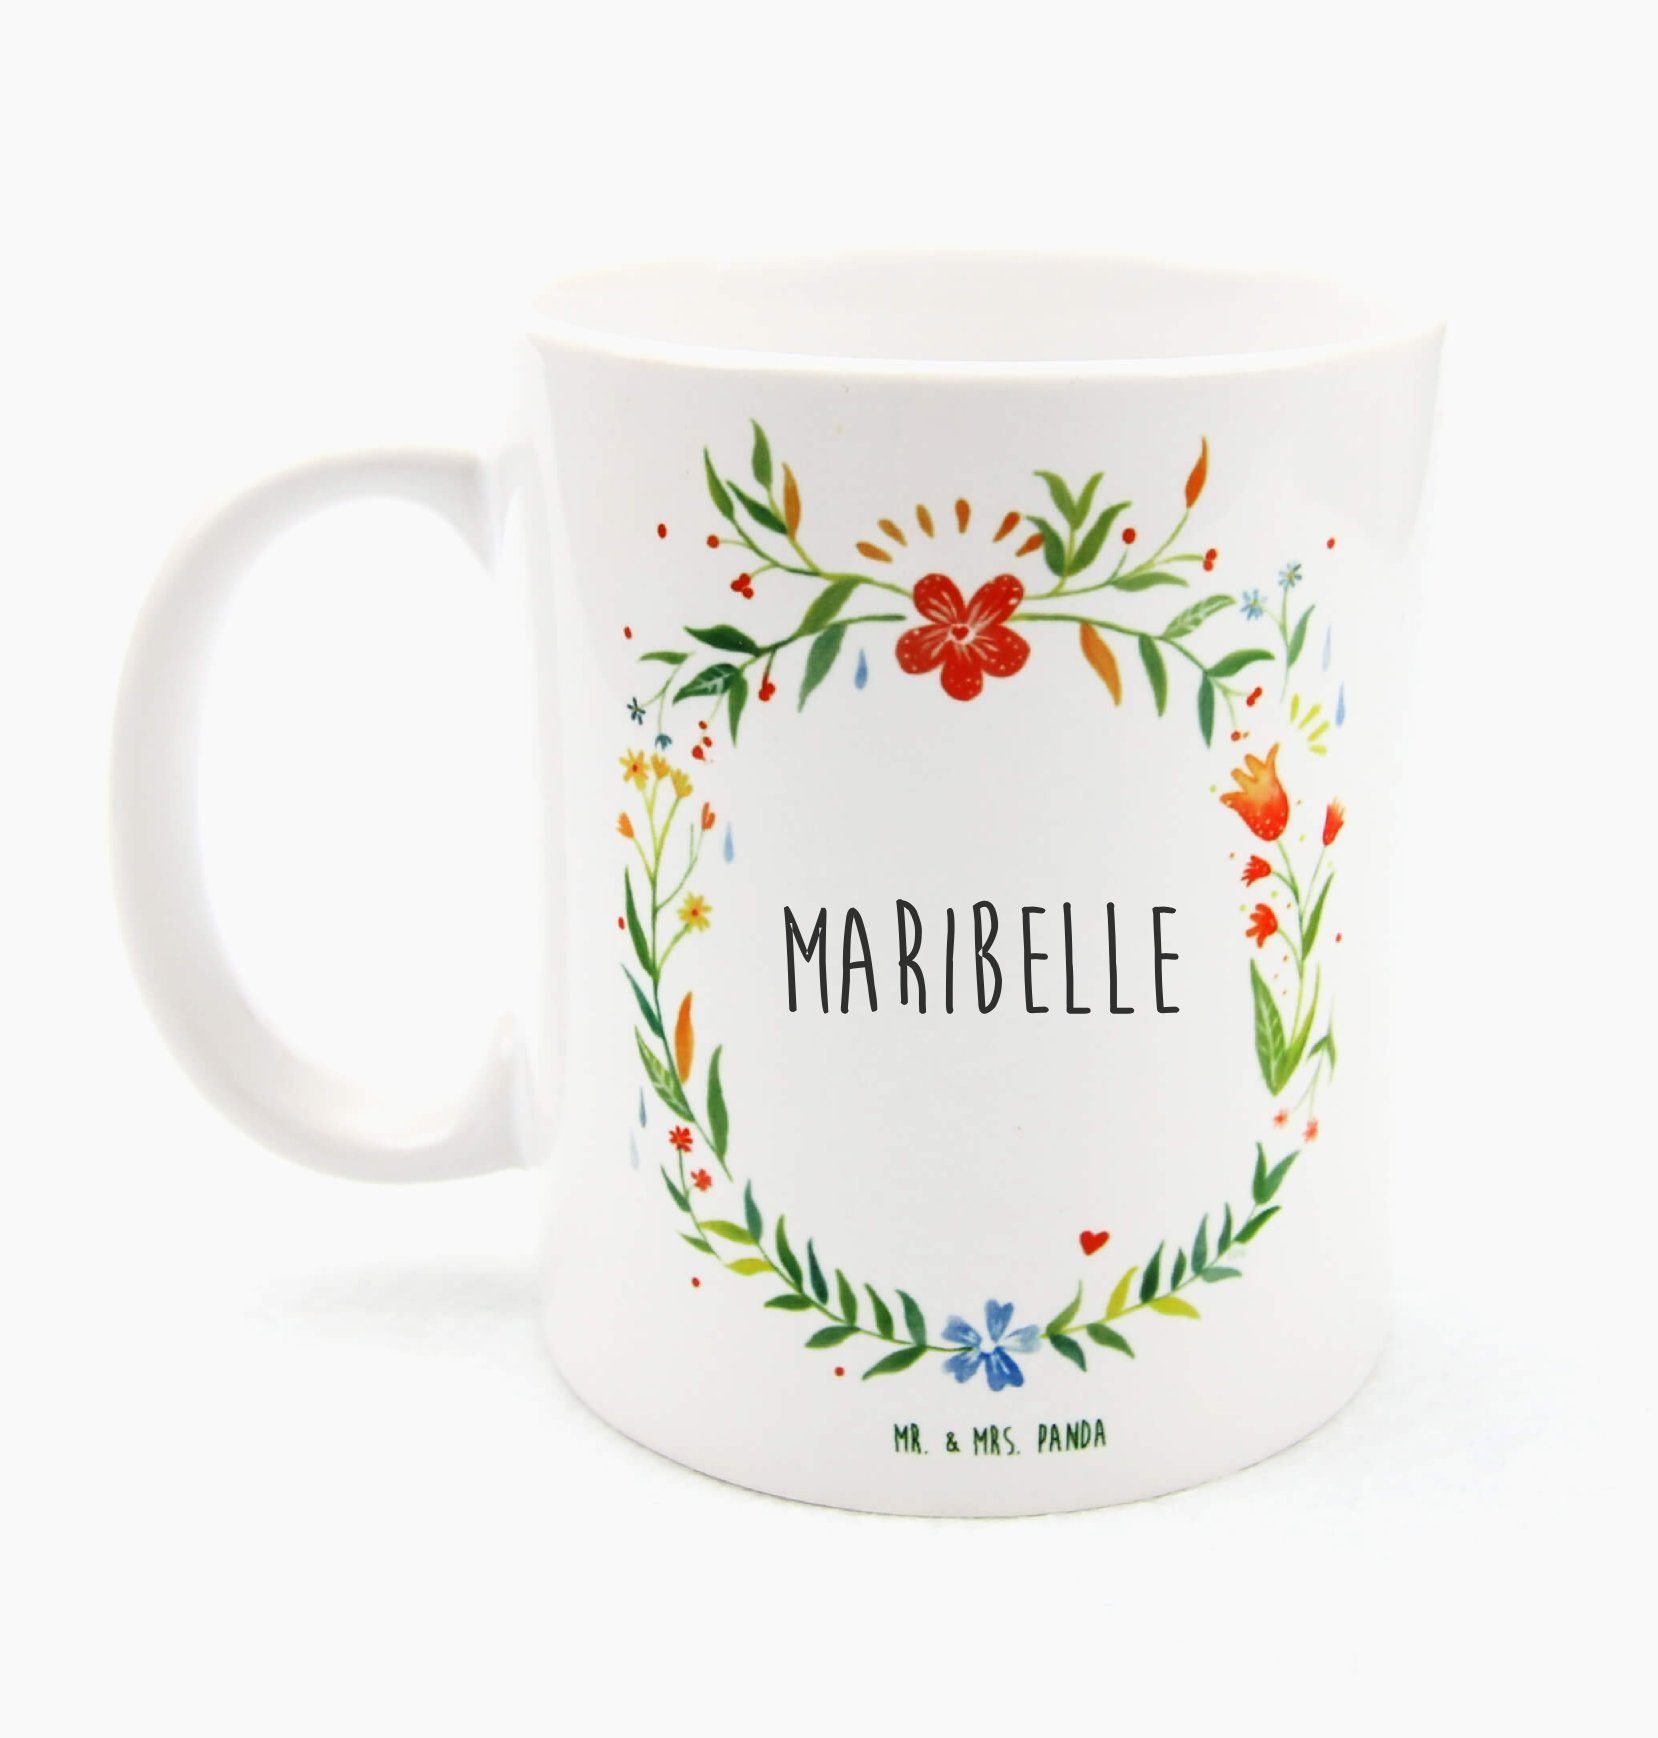 Mr. & Mrs. Panda Tasse Maribelle - Geschenk, Tasse Sprüche, Kaffeebecher, Büro Tasse, Kerami, Keramik